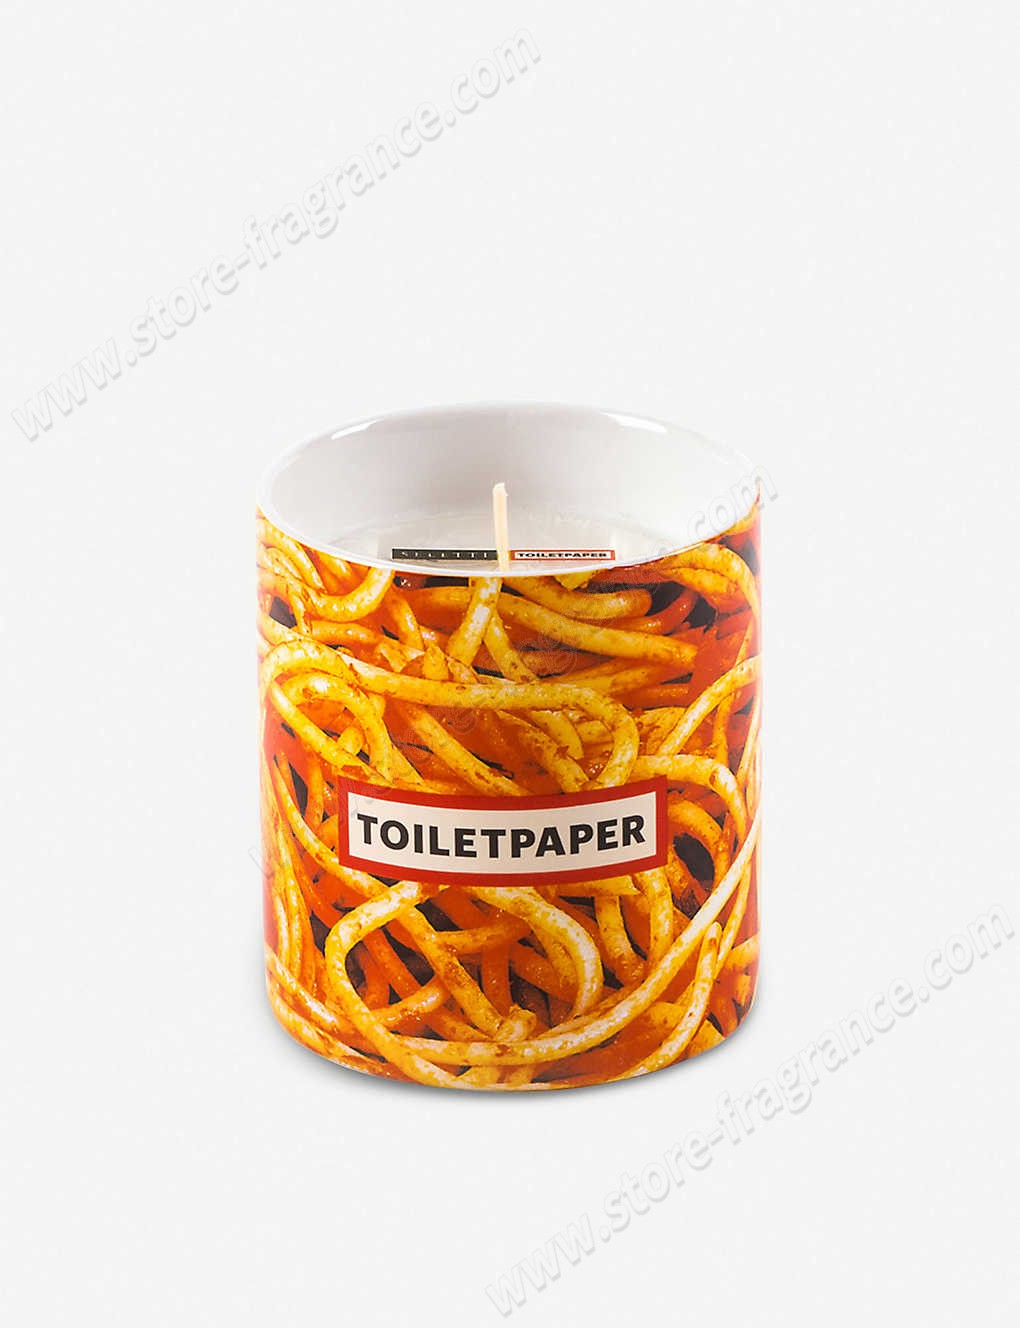 SELETTI/Seletti Wears Toiletpaper Spaghetti porcelain scented candle ✿ Discount Store - SELETTI/Seletti Wears Toiletpaper Spaghetti porcelain scented candle ✿ Discount Store